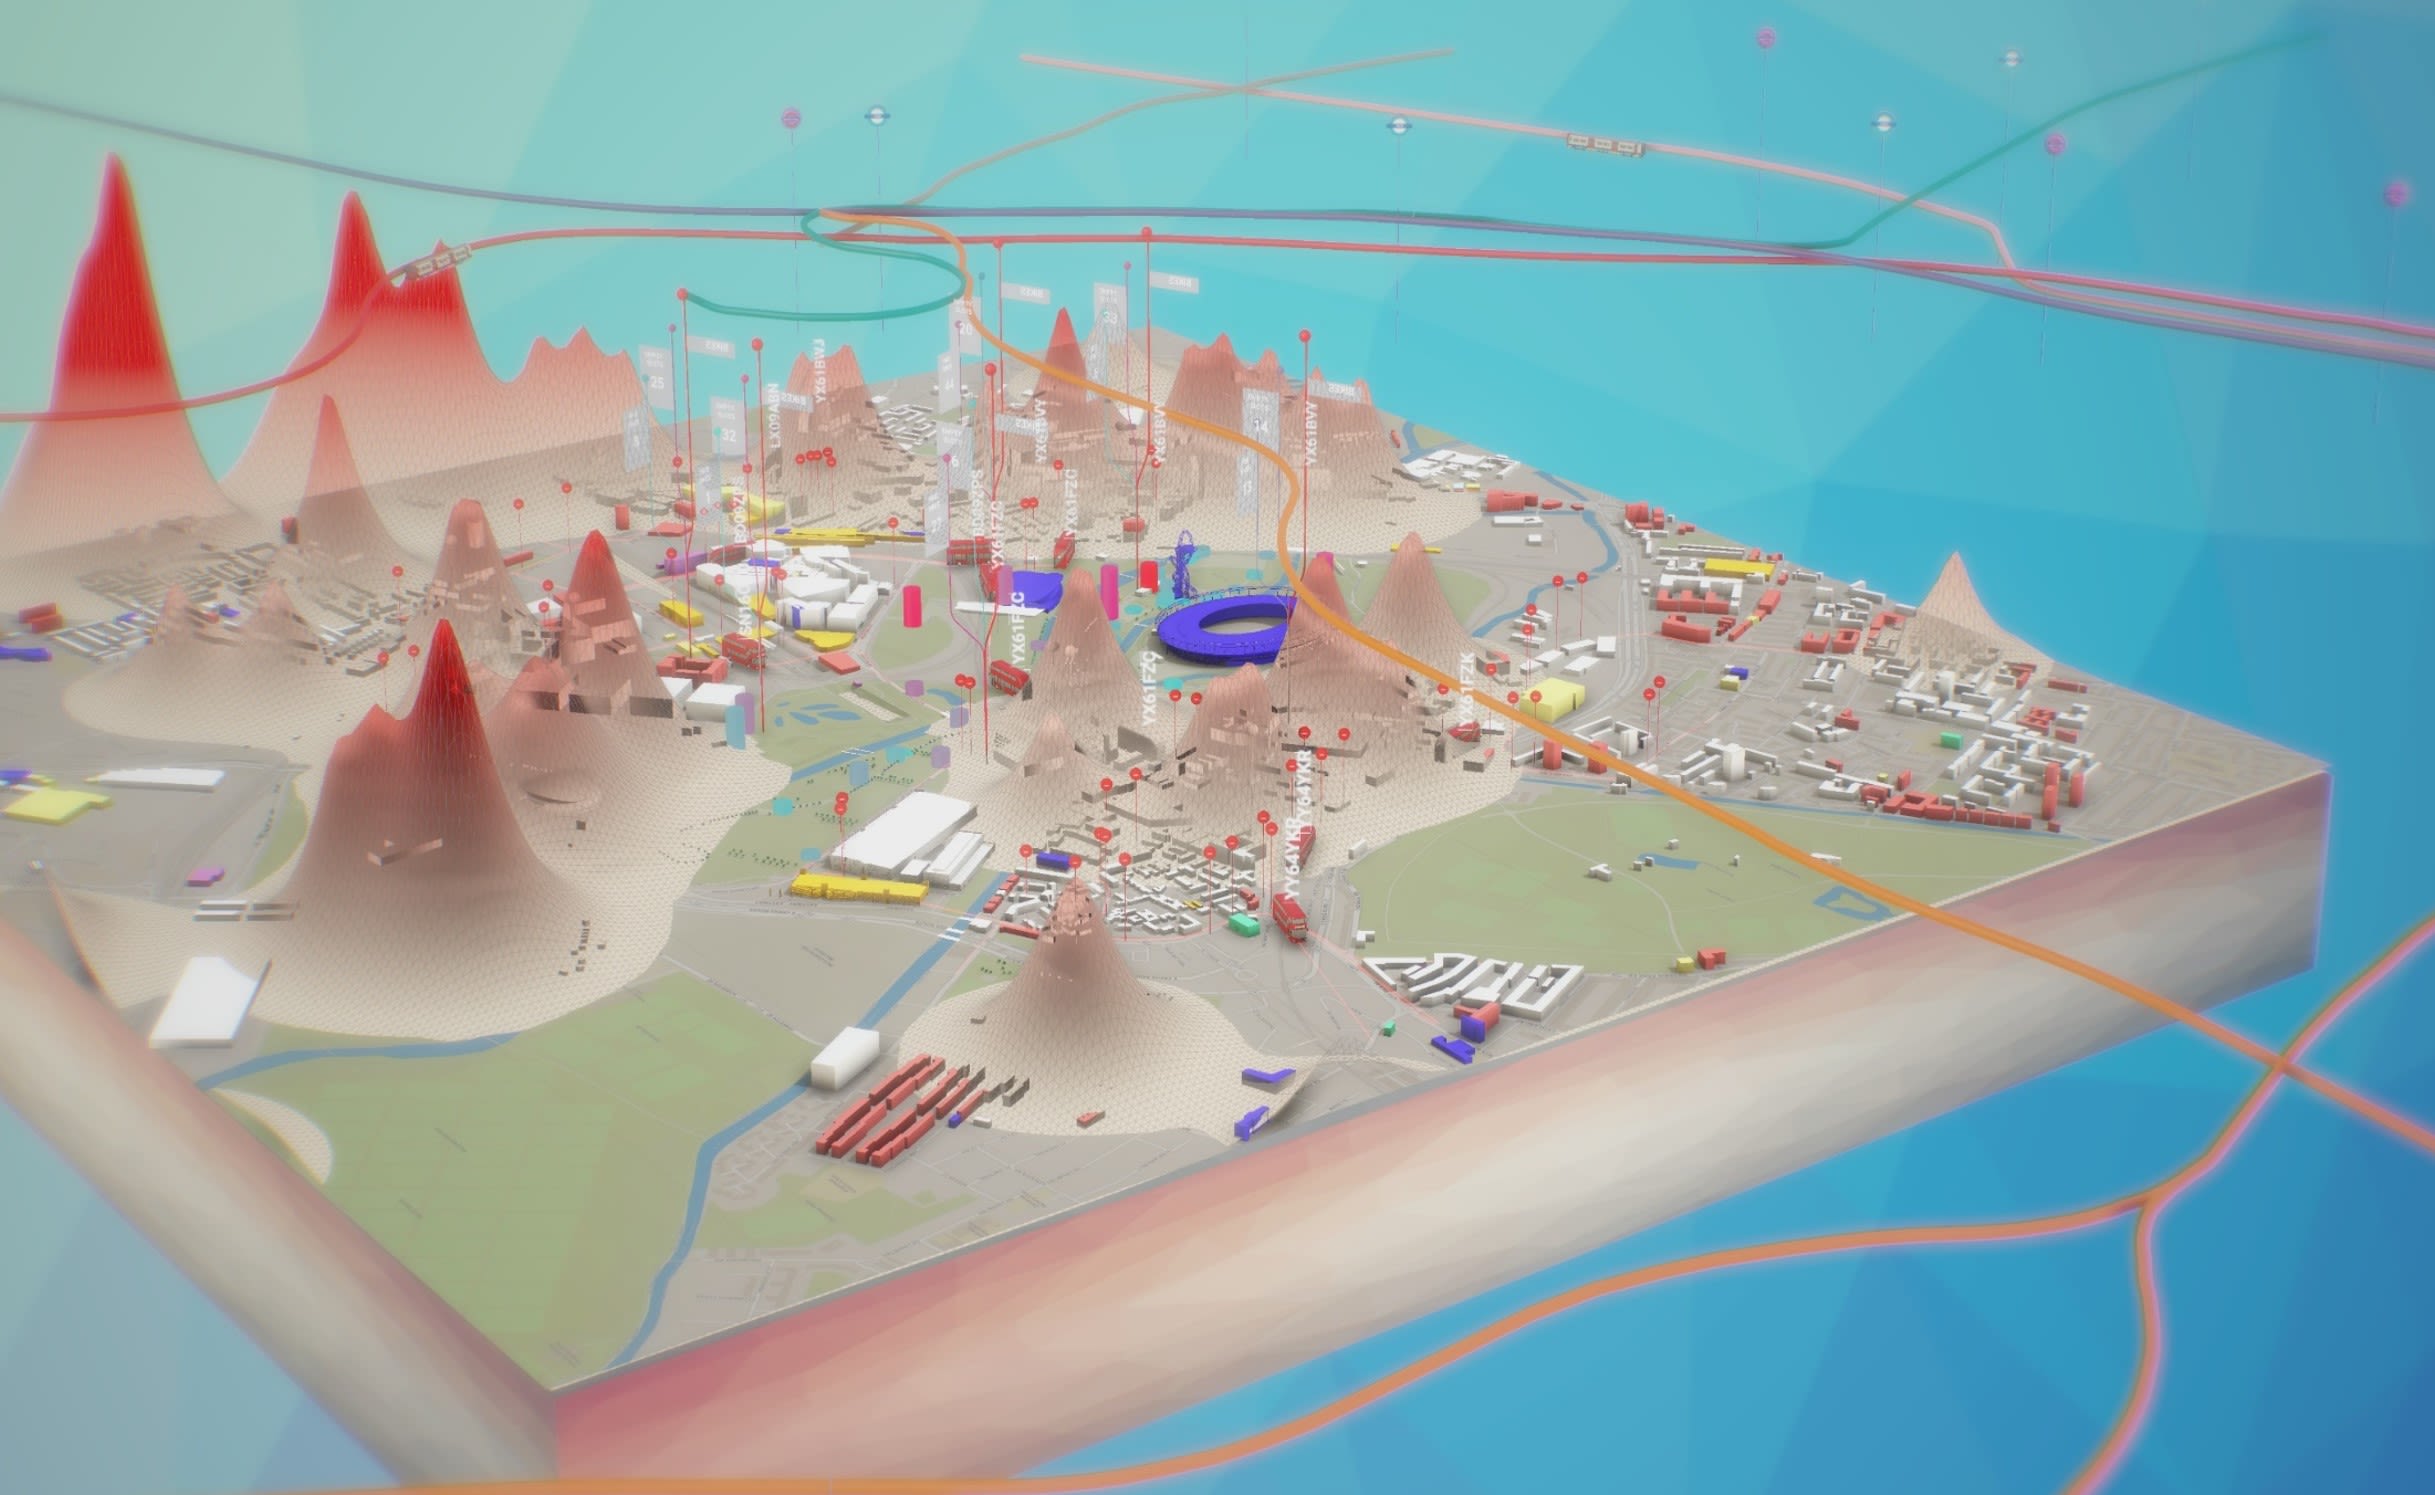 3D virtual map of London